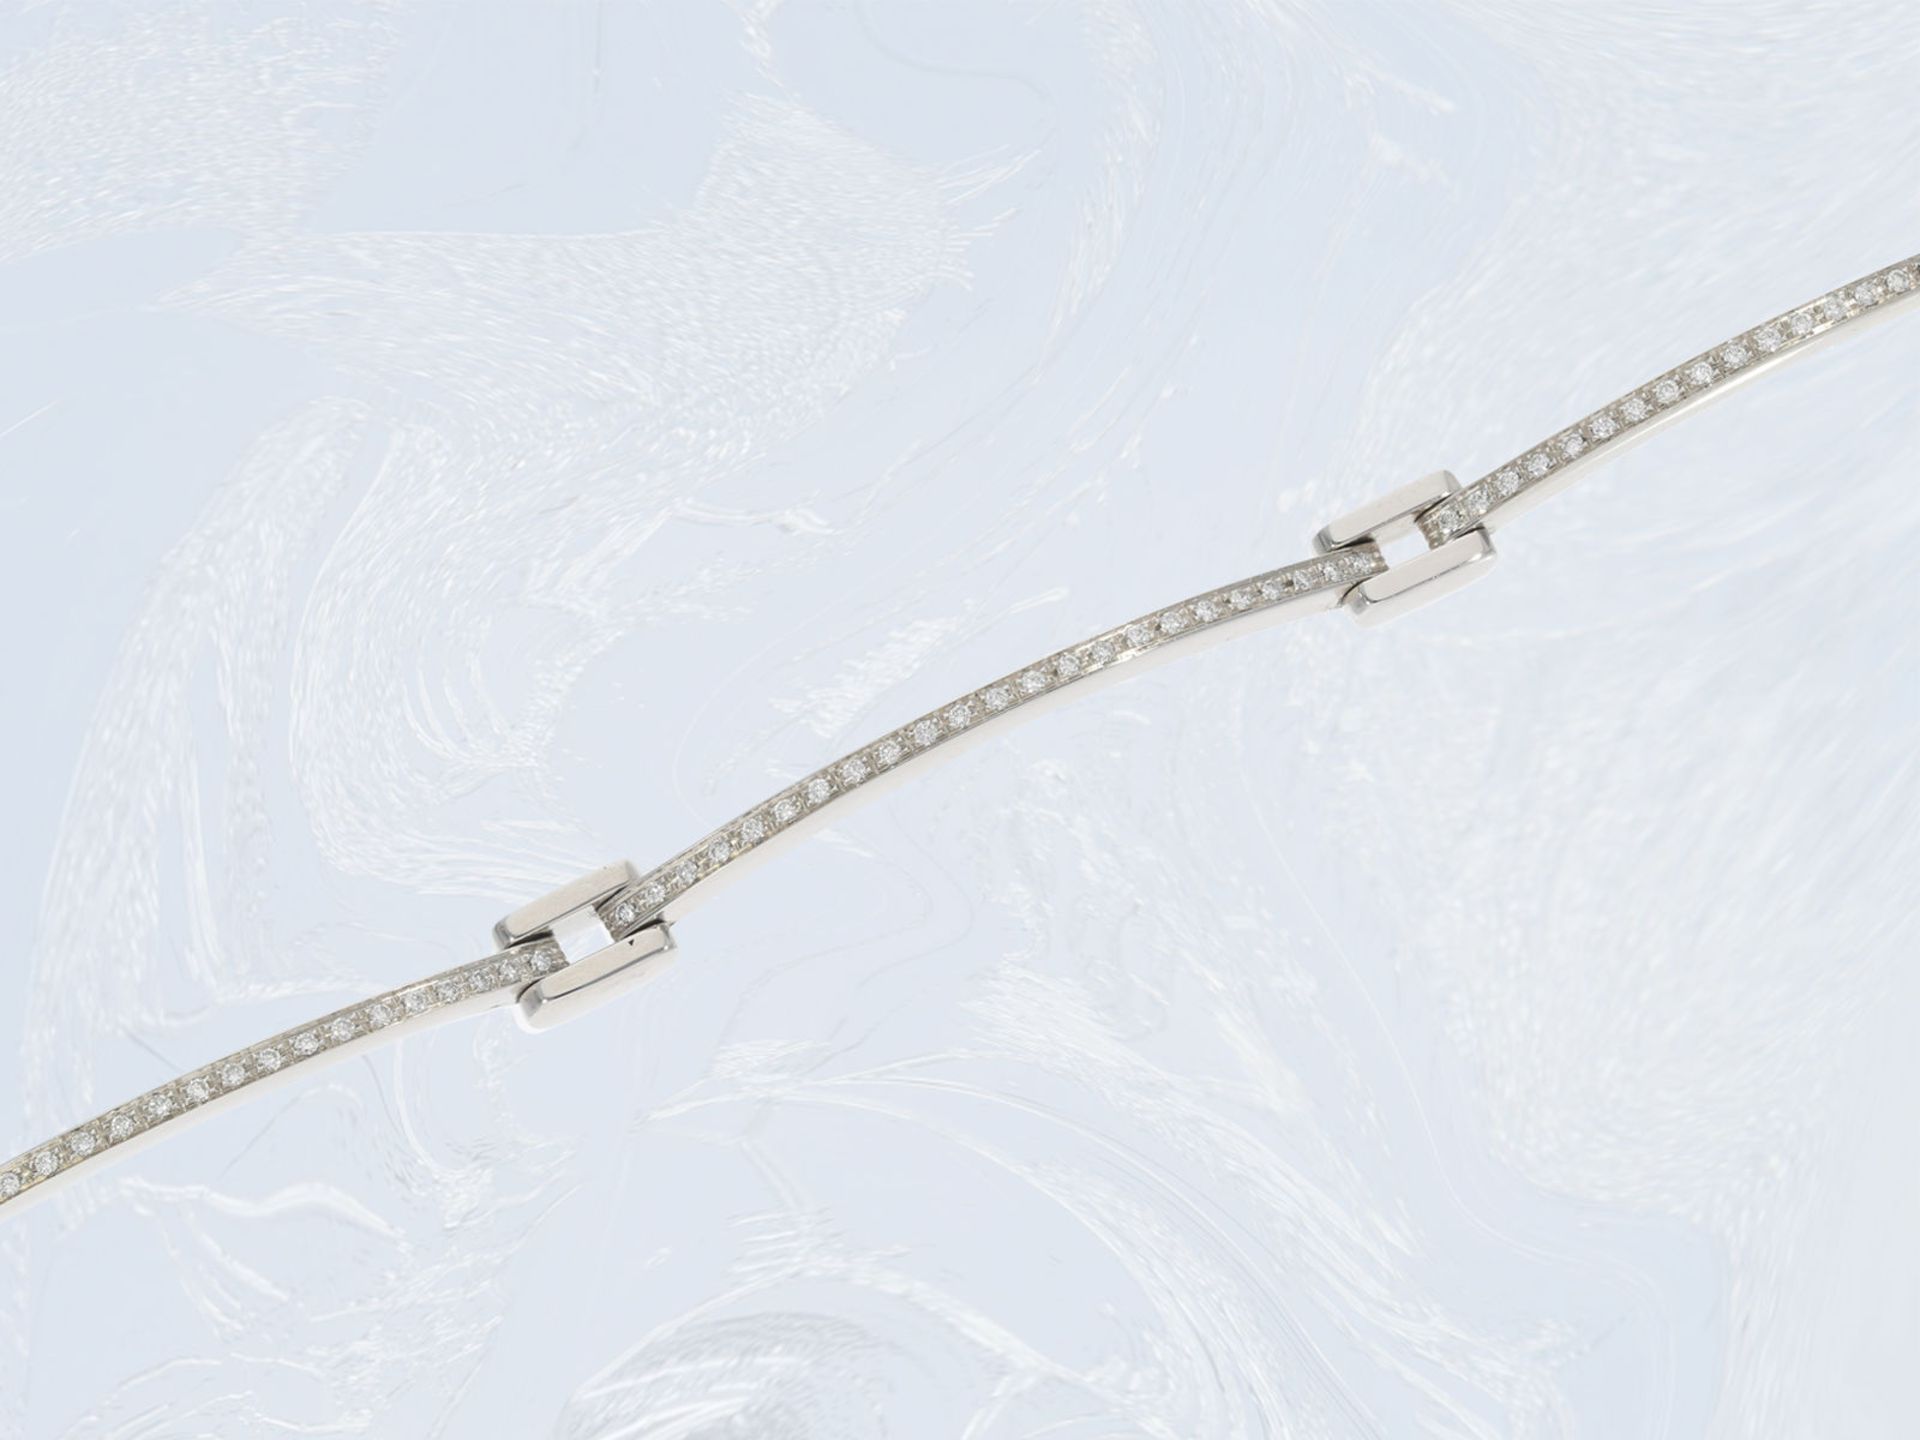 Armband: neuwertiges weißgoldenes, modernes Brillantarmband, ca. 0,52ct, 18K GoldCa. 18cm lang, - Bild 2 aus 2